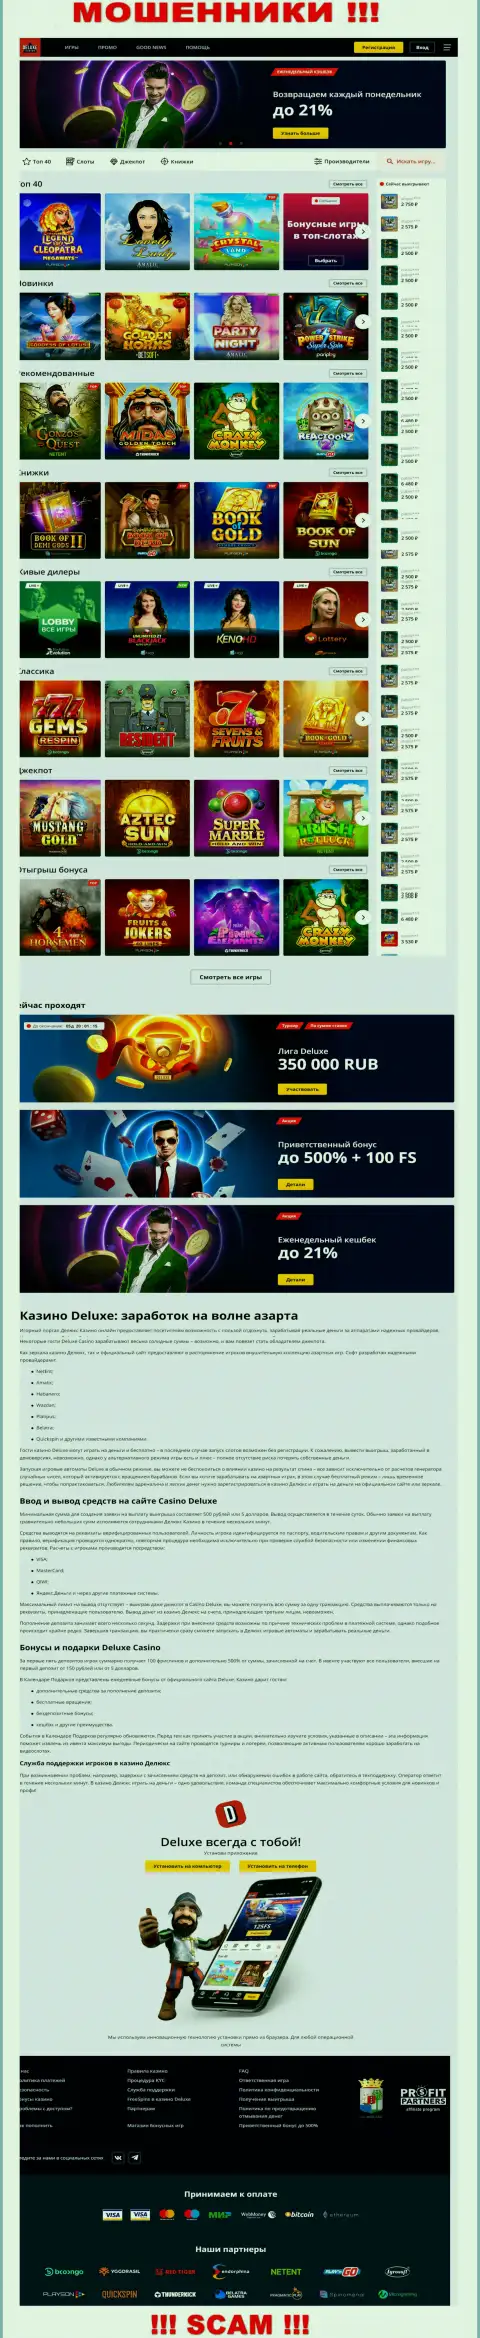 Омновная онлайн страница организации Deluxe Casino